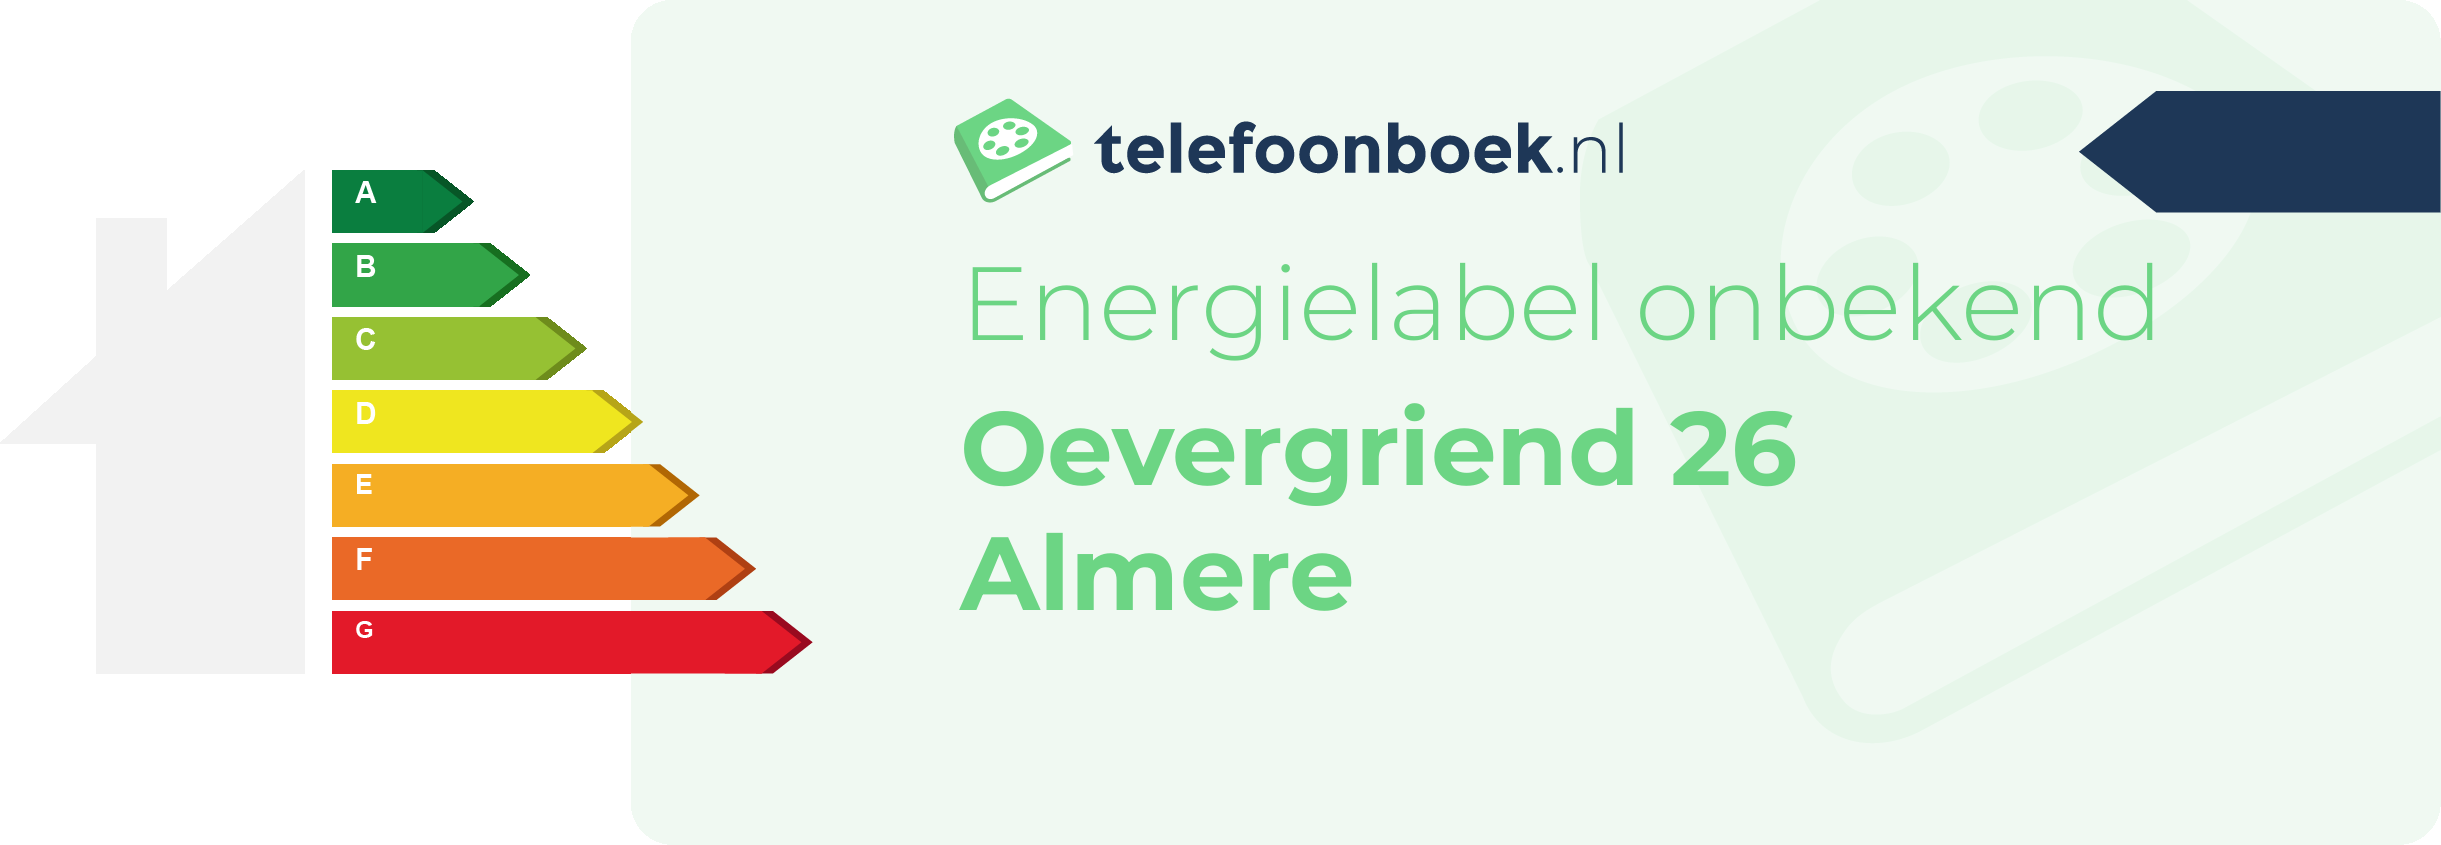 Energielabel Oevergriend 26 Almere